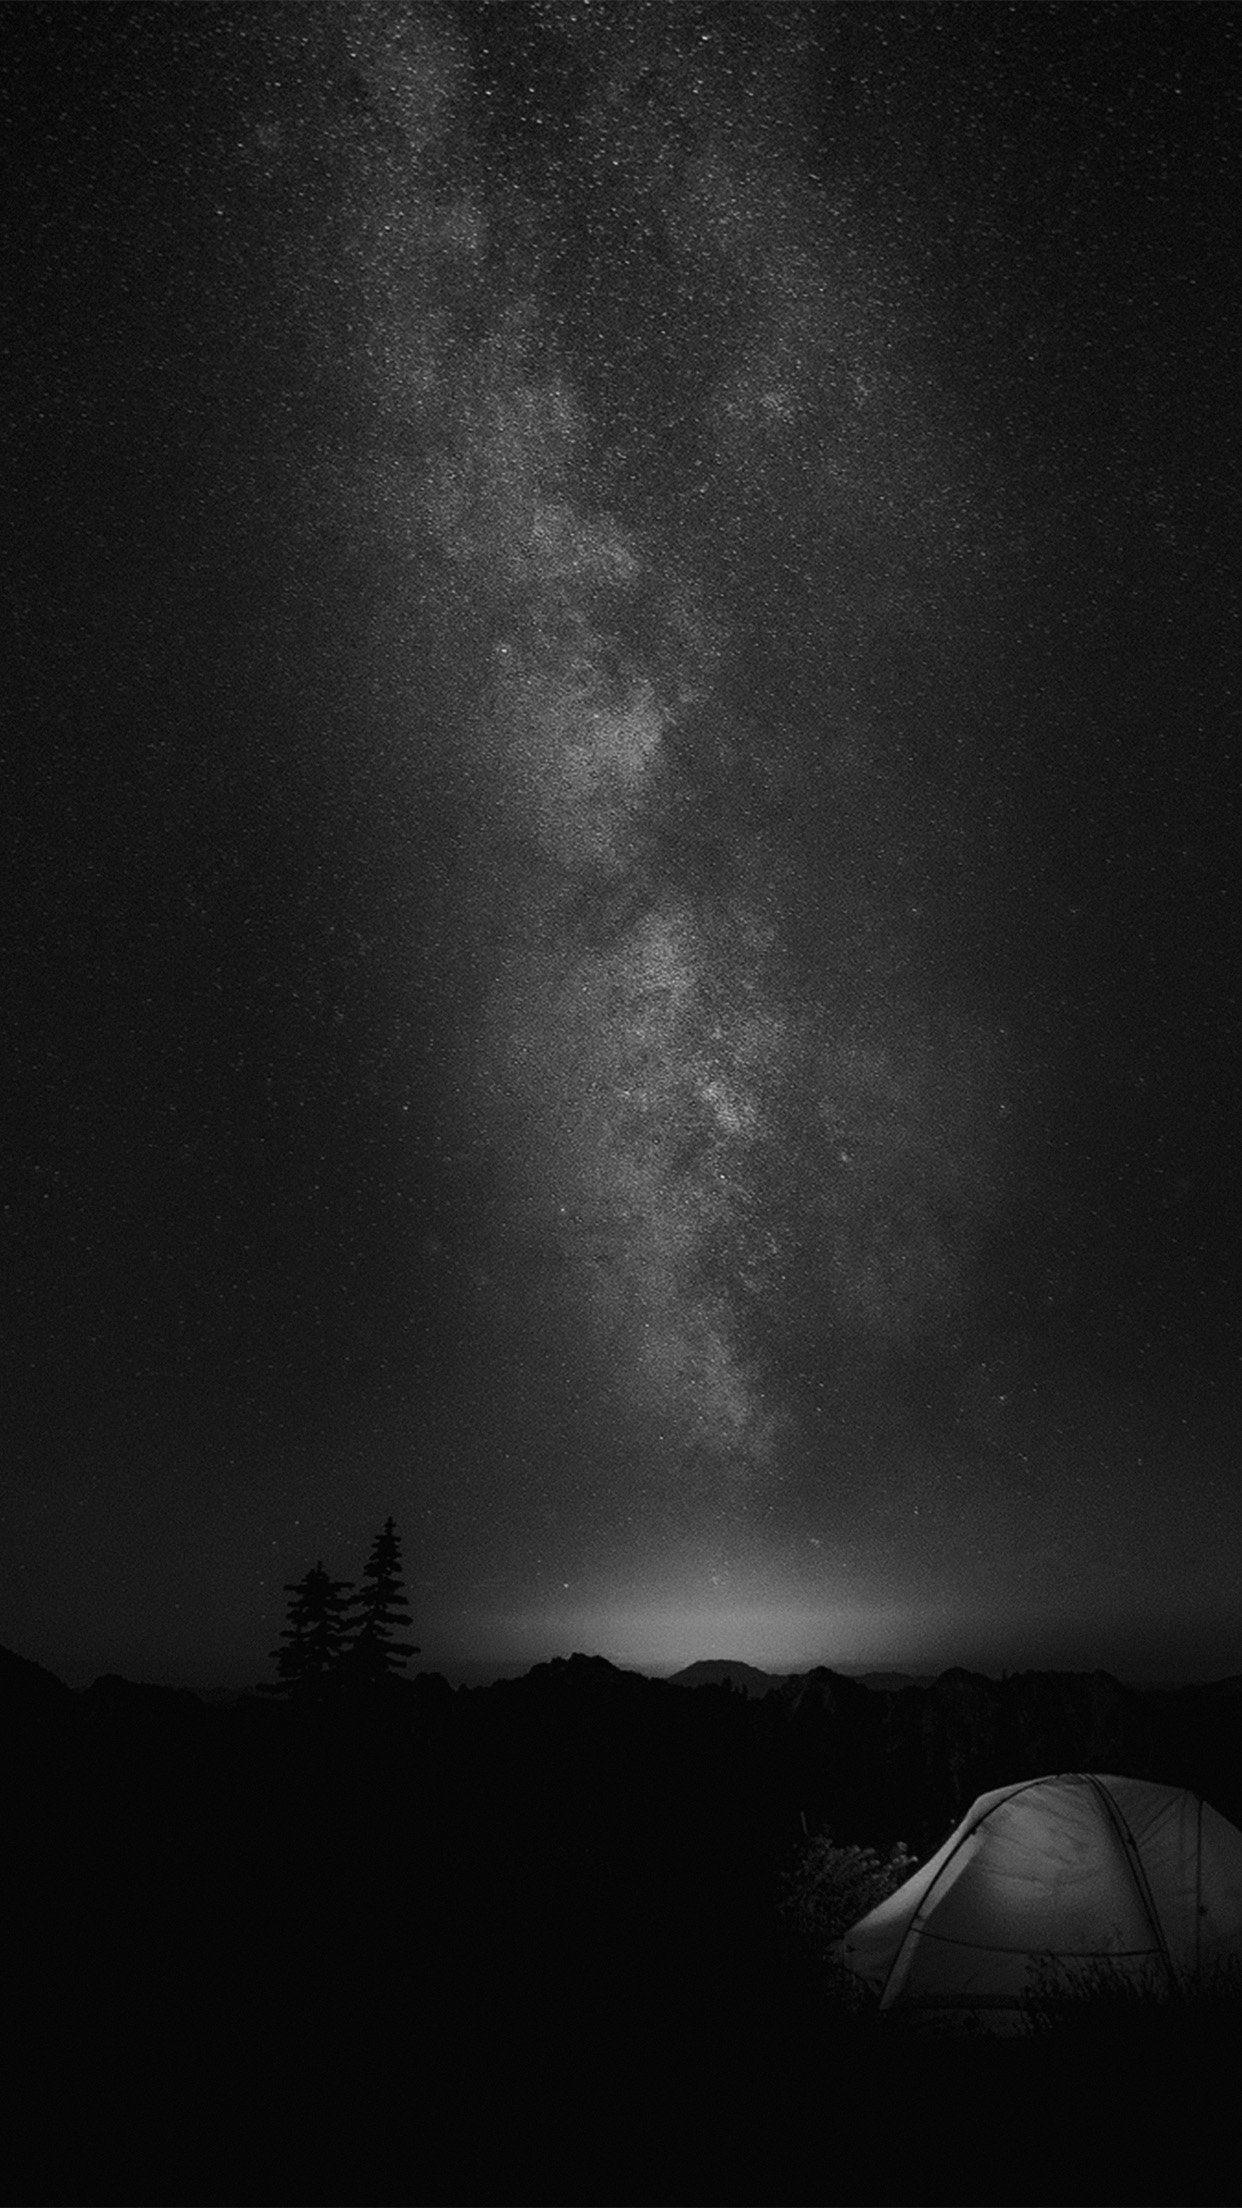 Camping Night Star Galaxy Milky Sky Dark Space Bw Dark Android